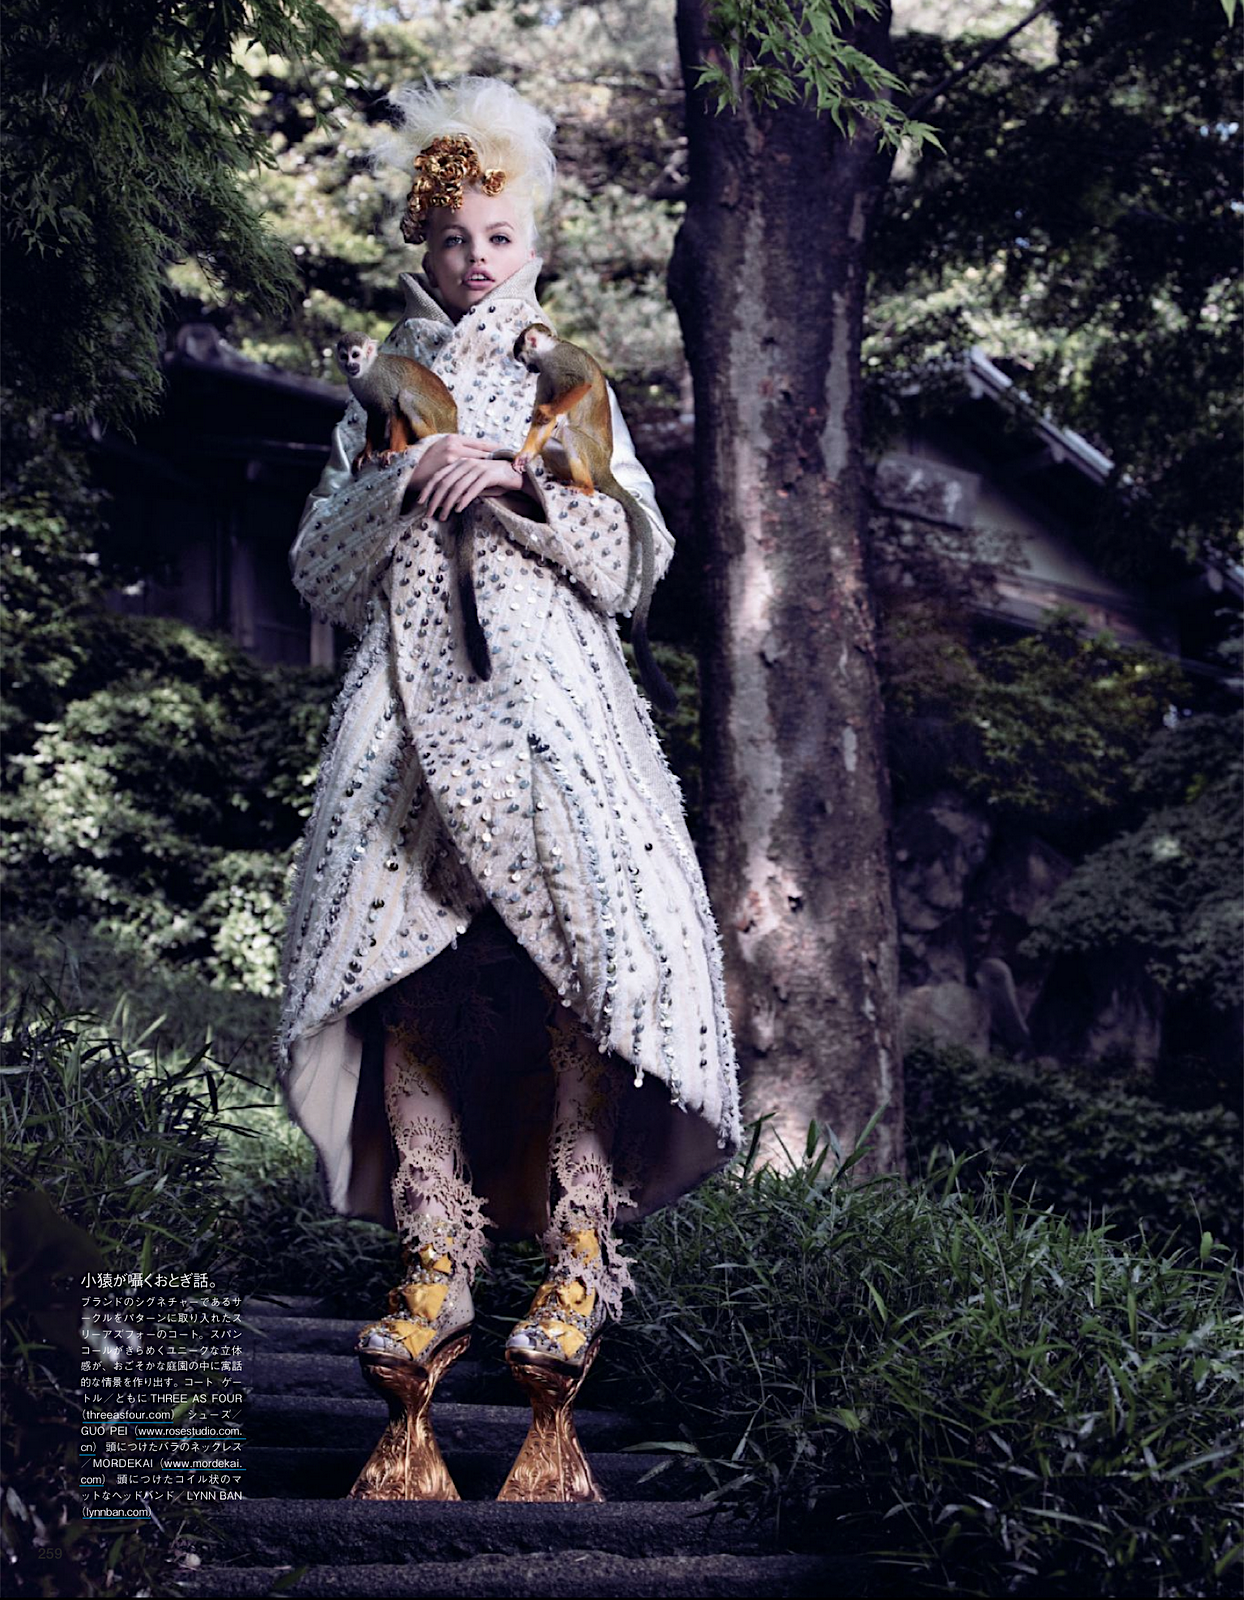 Daphne-Groeneveld-by-Mark-Segal-Vogue-Japan-November-2012-9.png